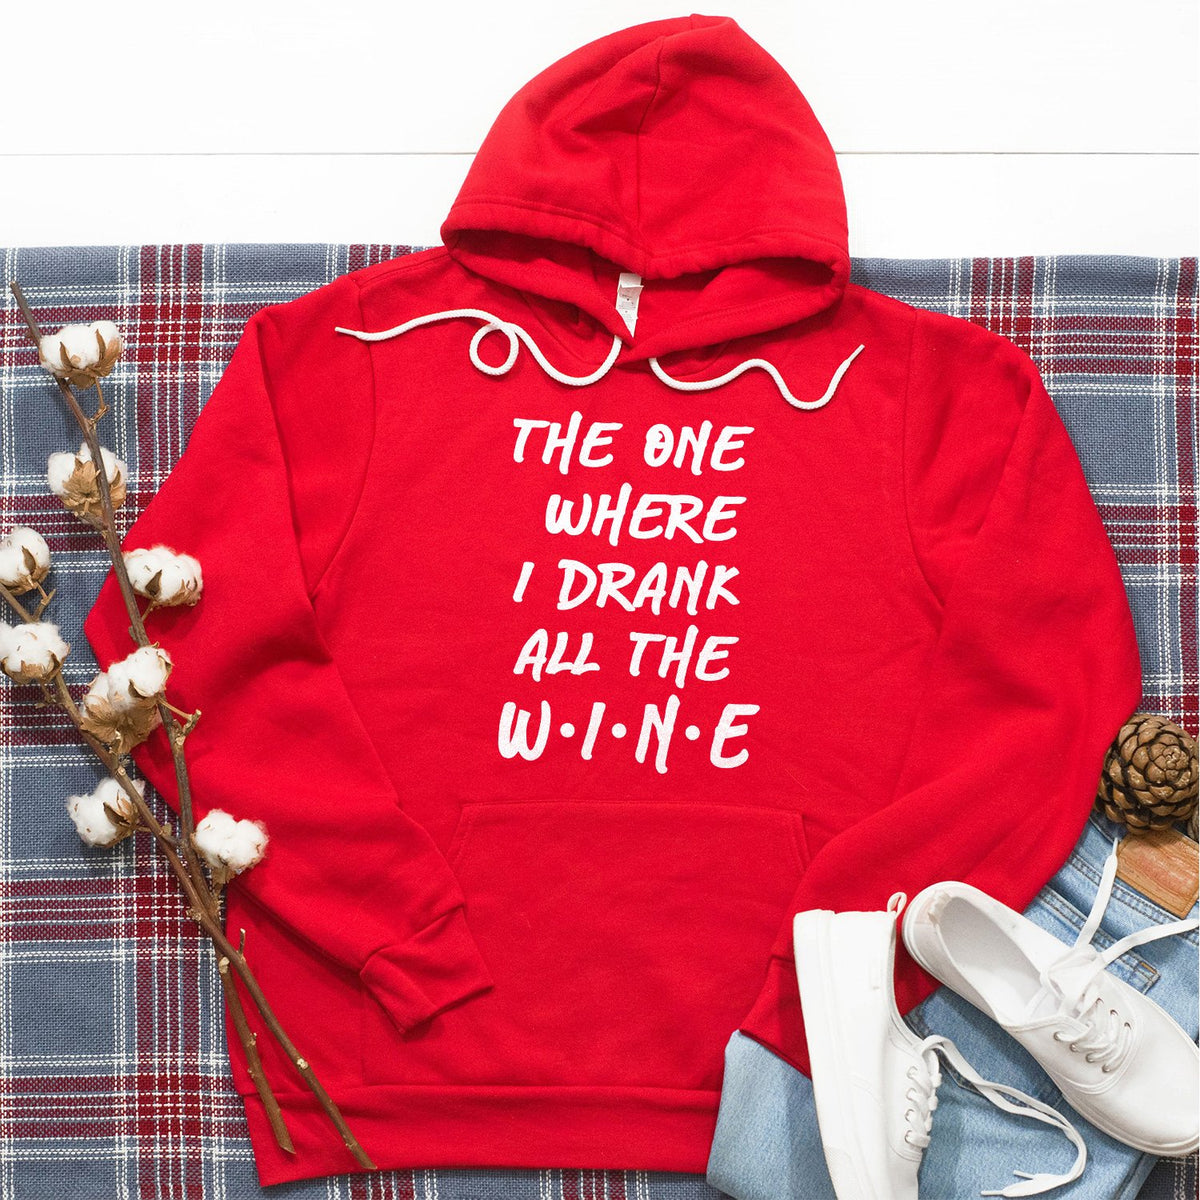 The One Where I Drank All the Wine - Hoodie Sweatshirt